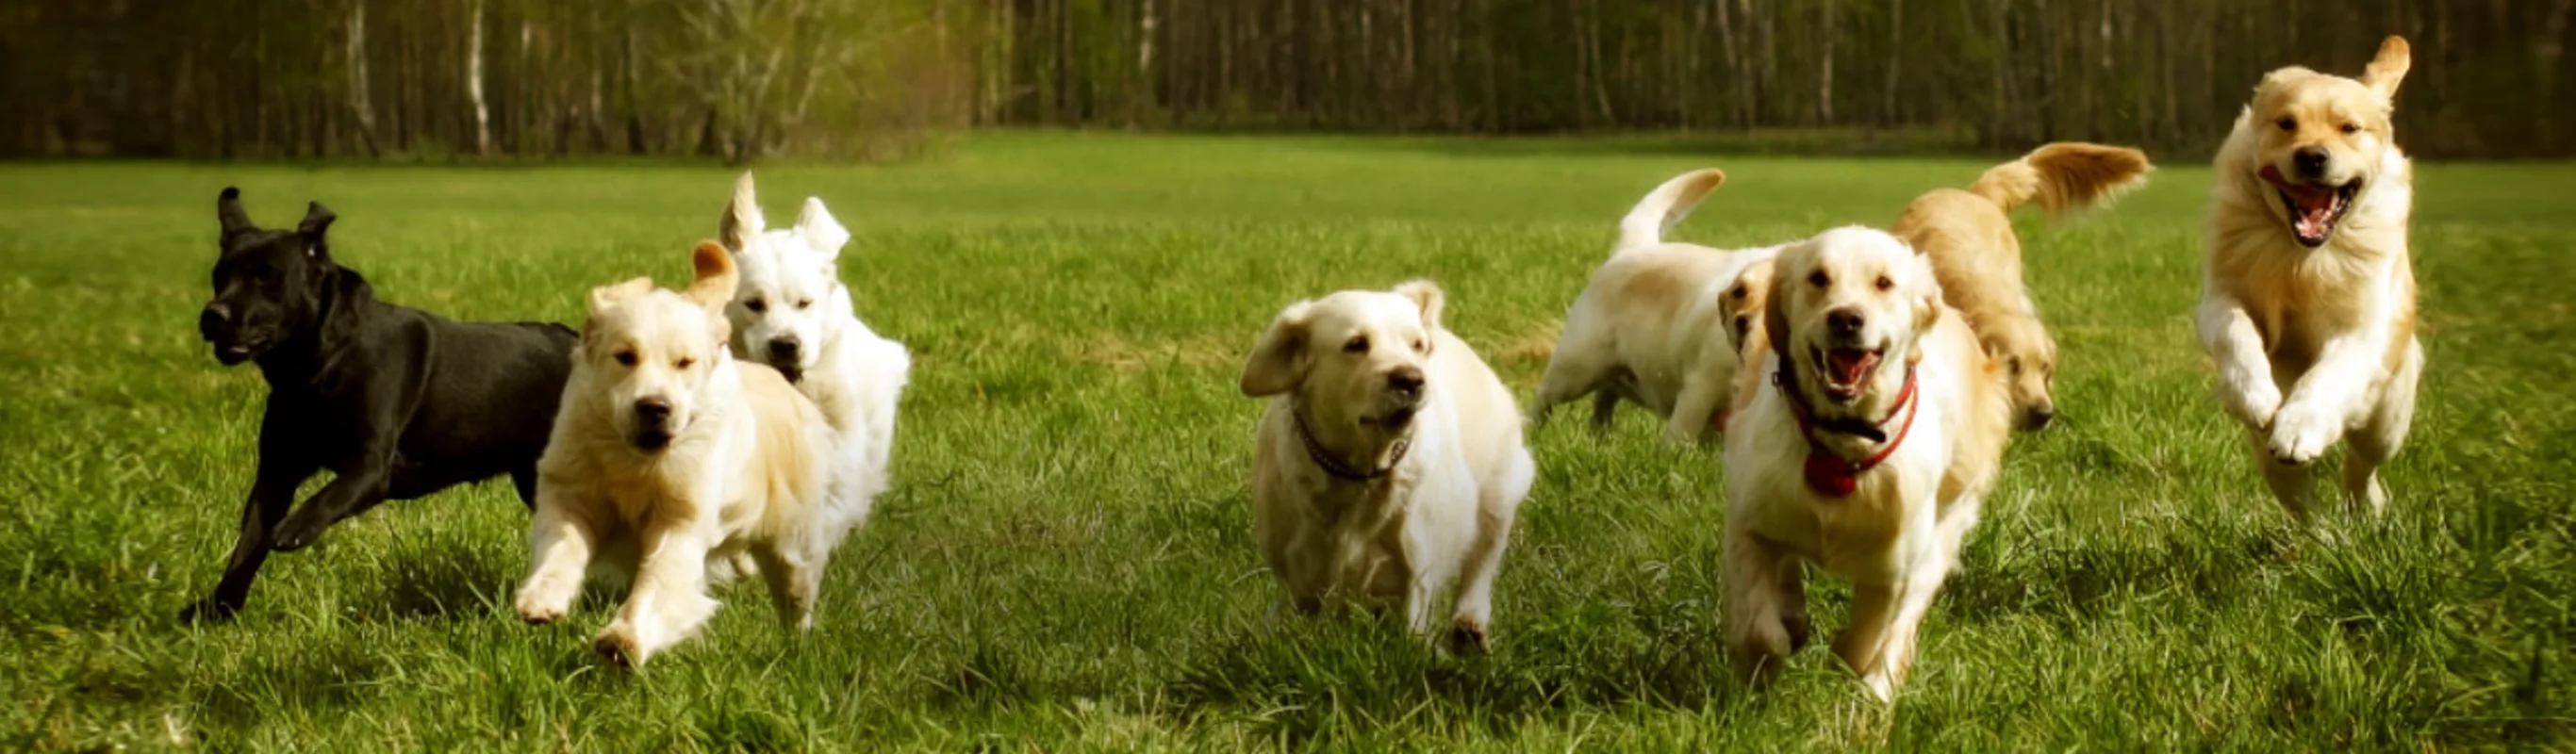 Dogs Running Outside in an Open Grass Field